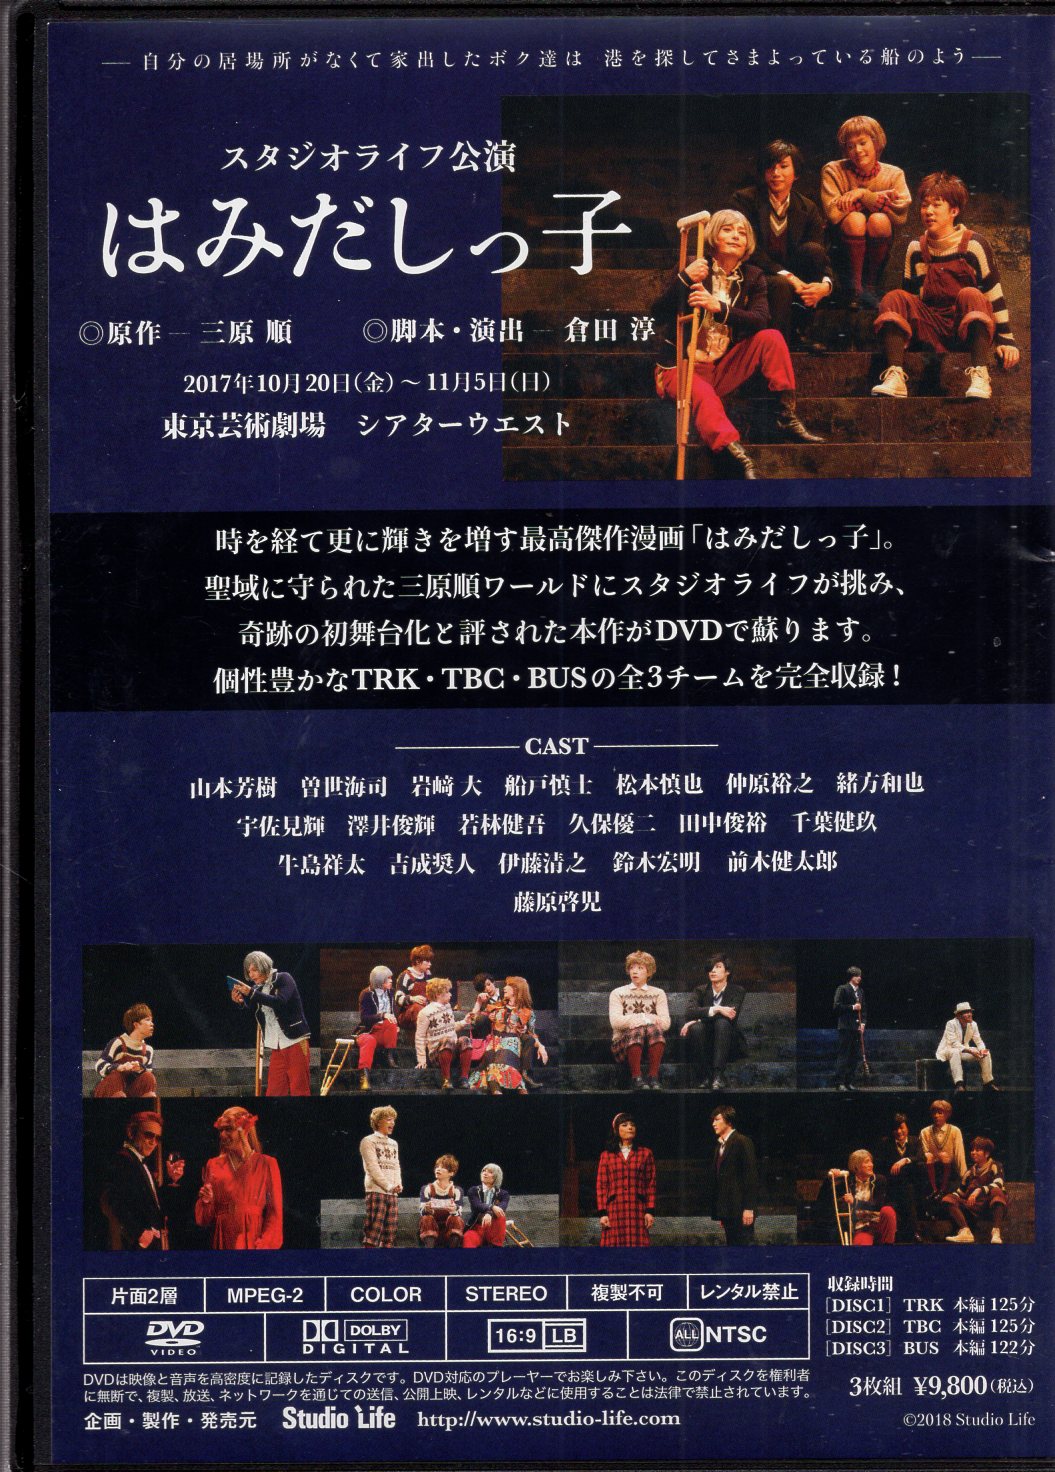 Studio Life 舞台 OZ 2枚組 - DVD/ブルーレイ